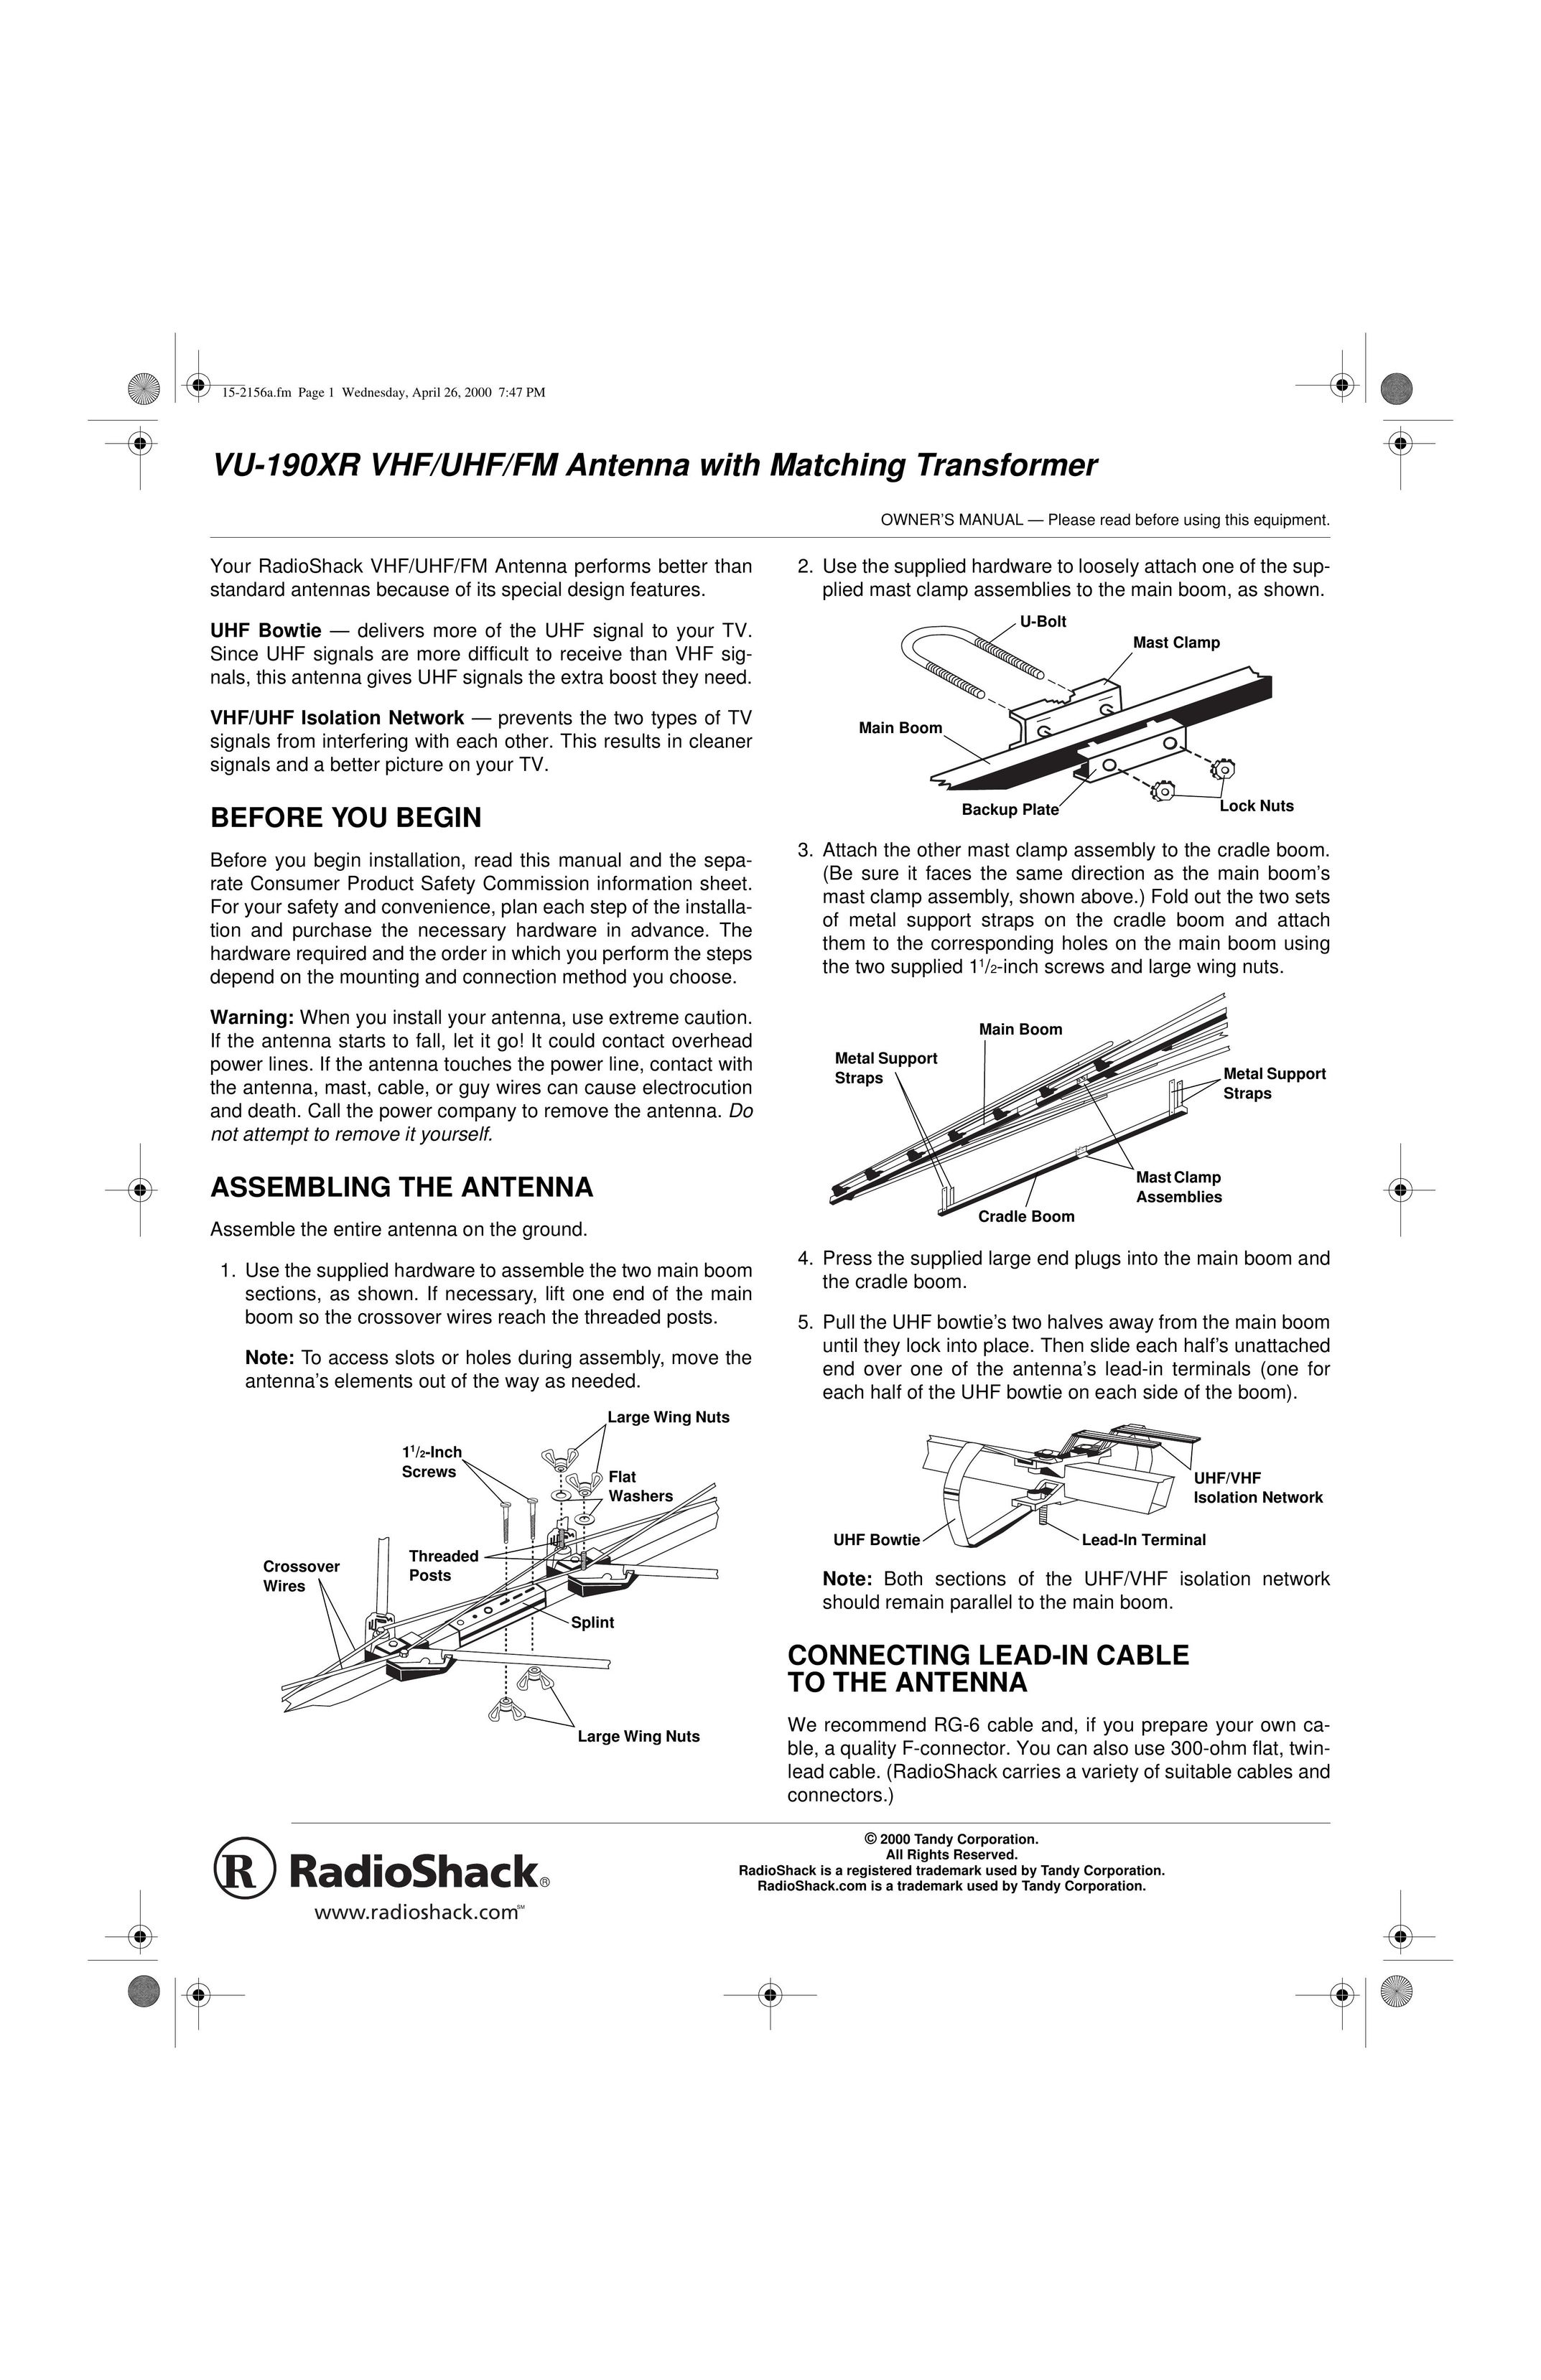 Radio Shack VU-190XR Radio Antenna User Manual